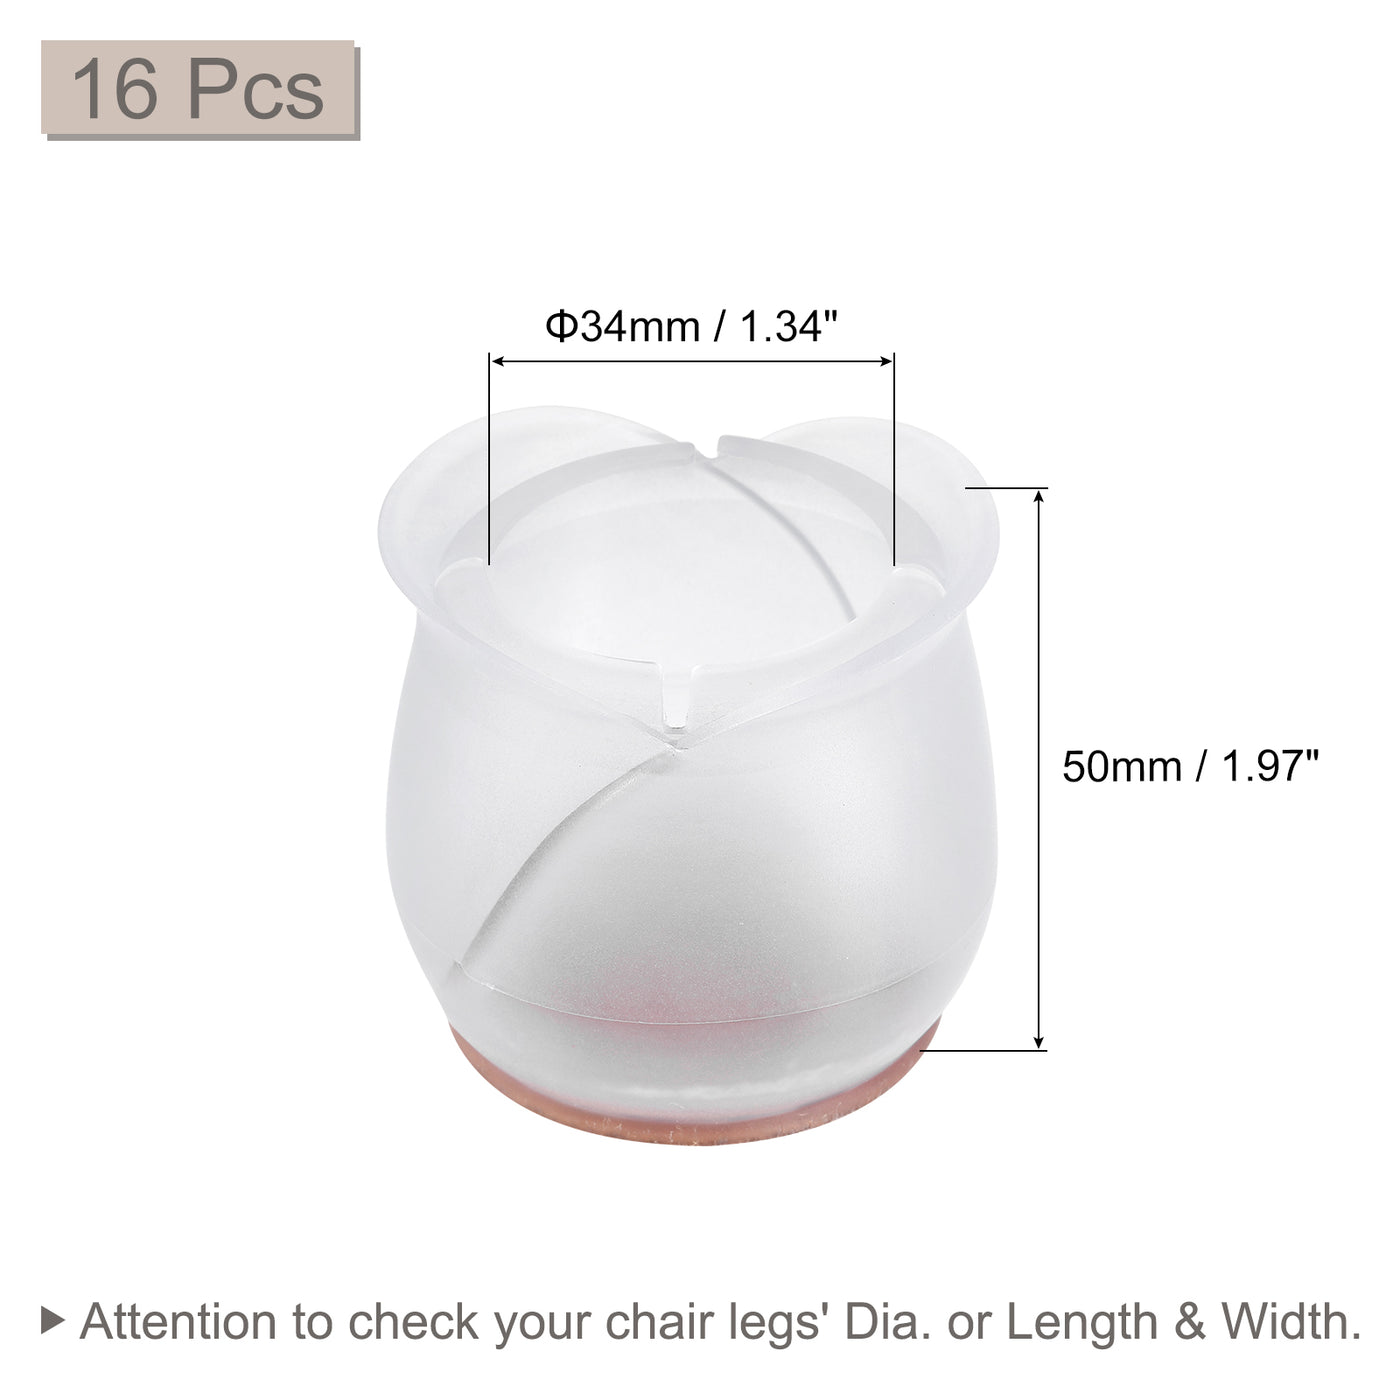 uxcell Uxcell Chair Leg Floor Protectors, 16Pcs 34mm(1.34") PVC & Felt Chair Leg Cover Caps for Hardwood Floors (Clear White)